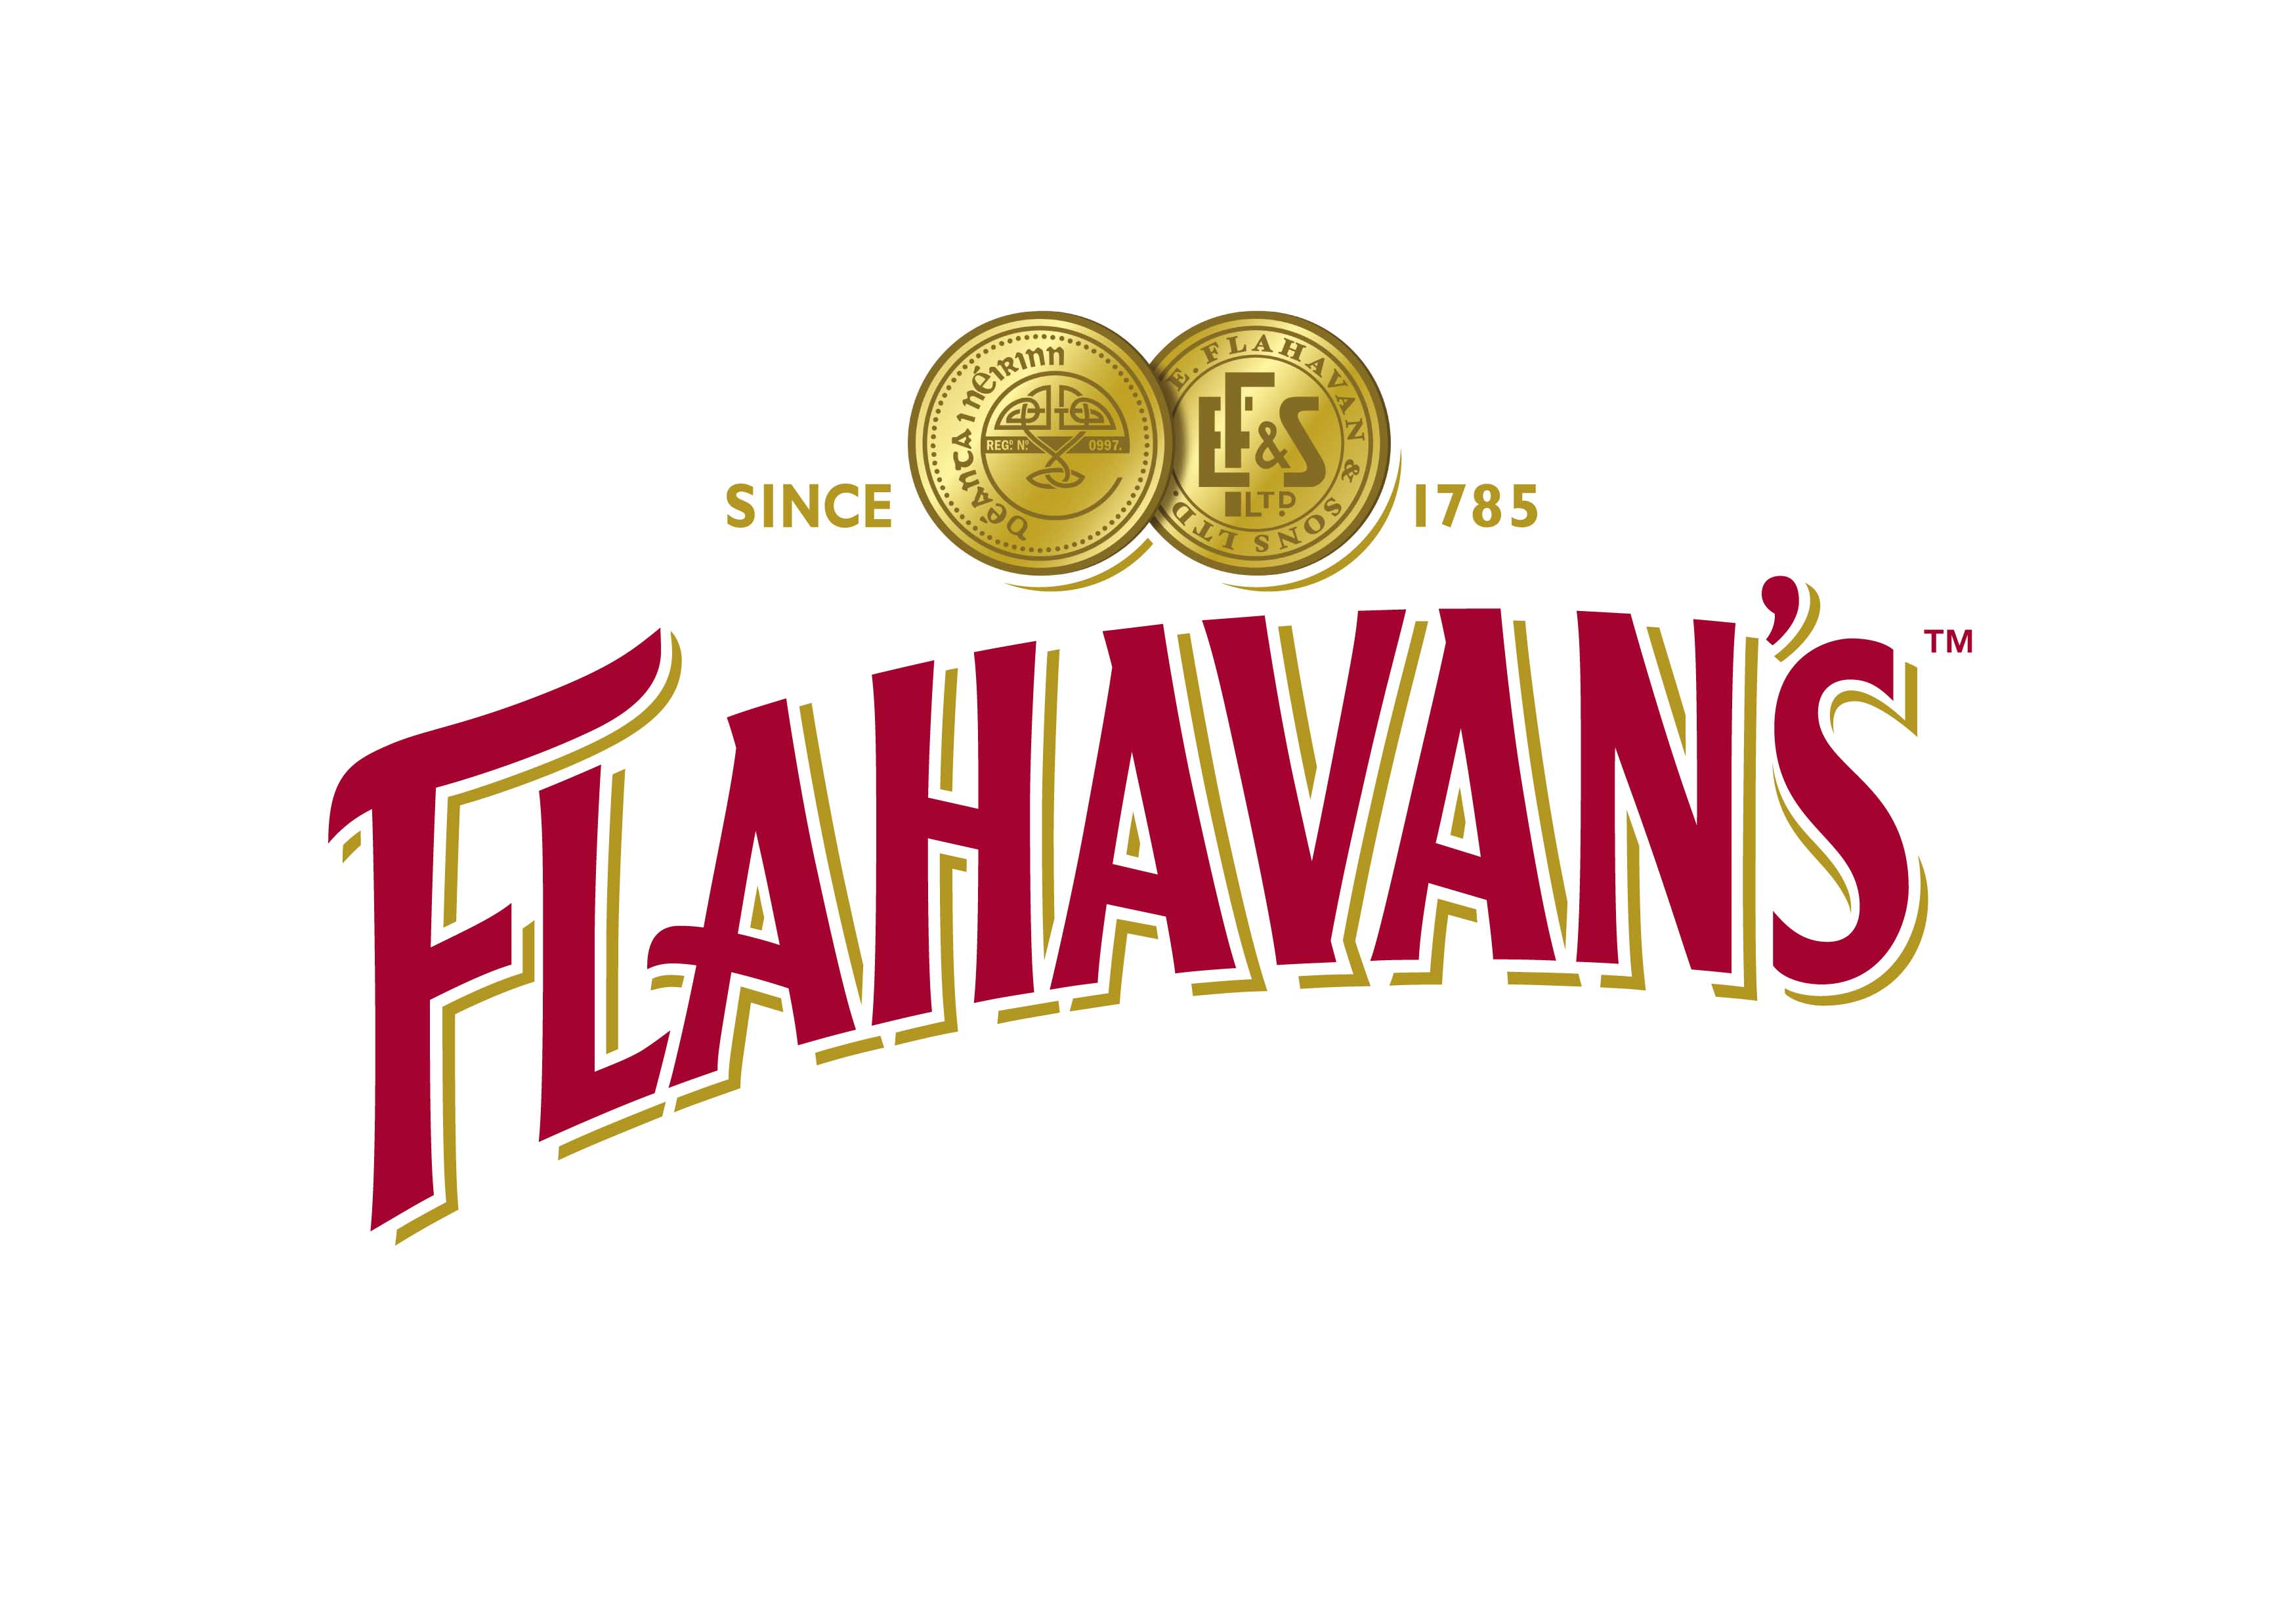 flahavans_logo---gold-coins.jpg